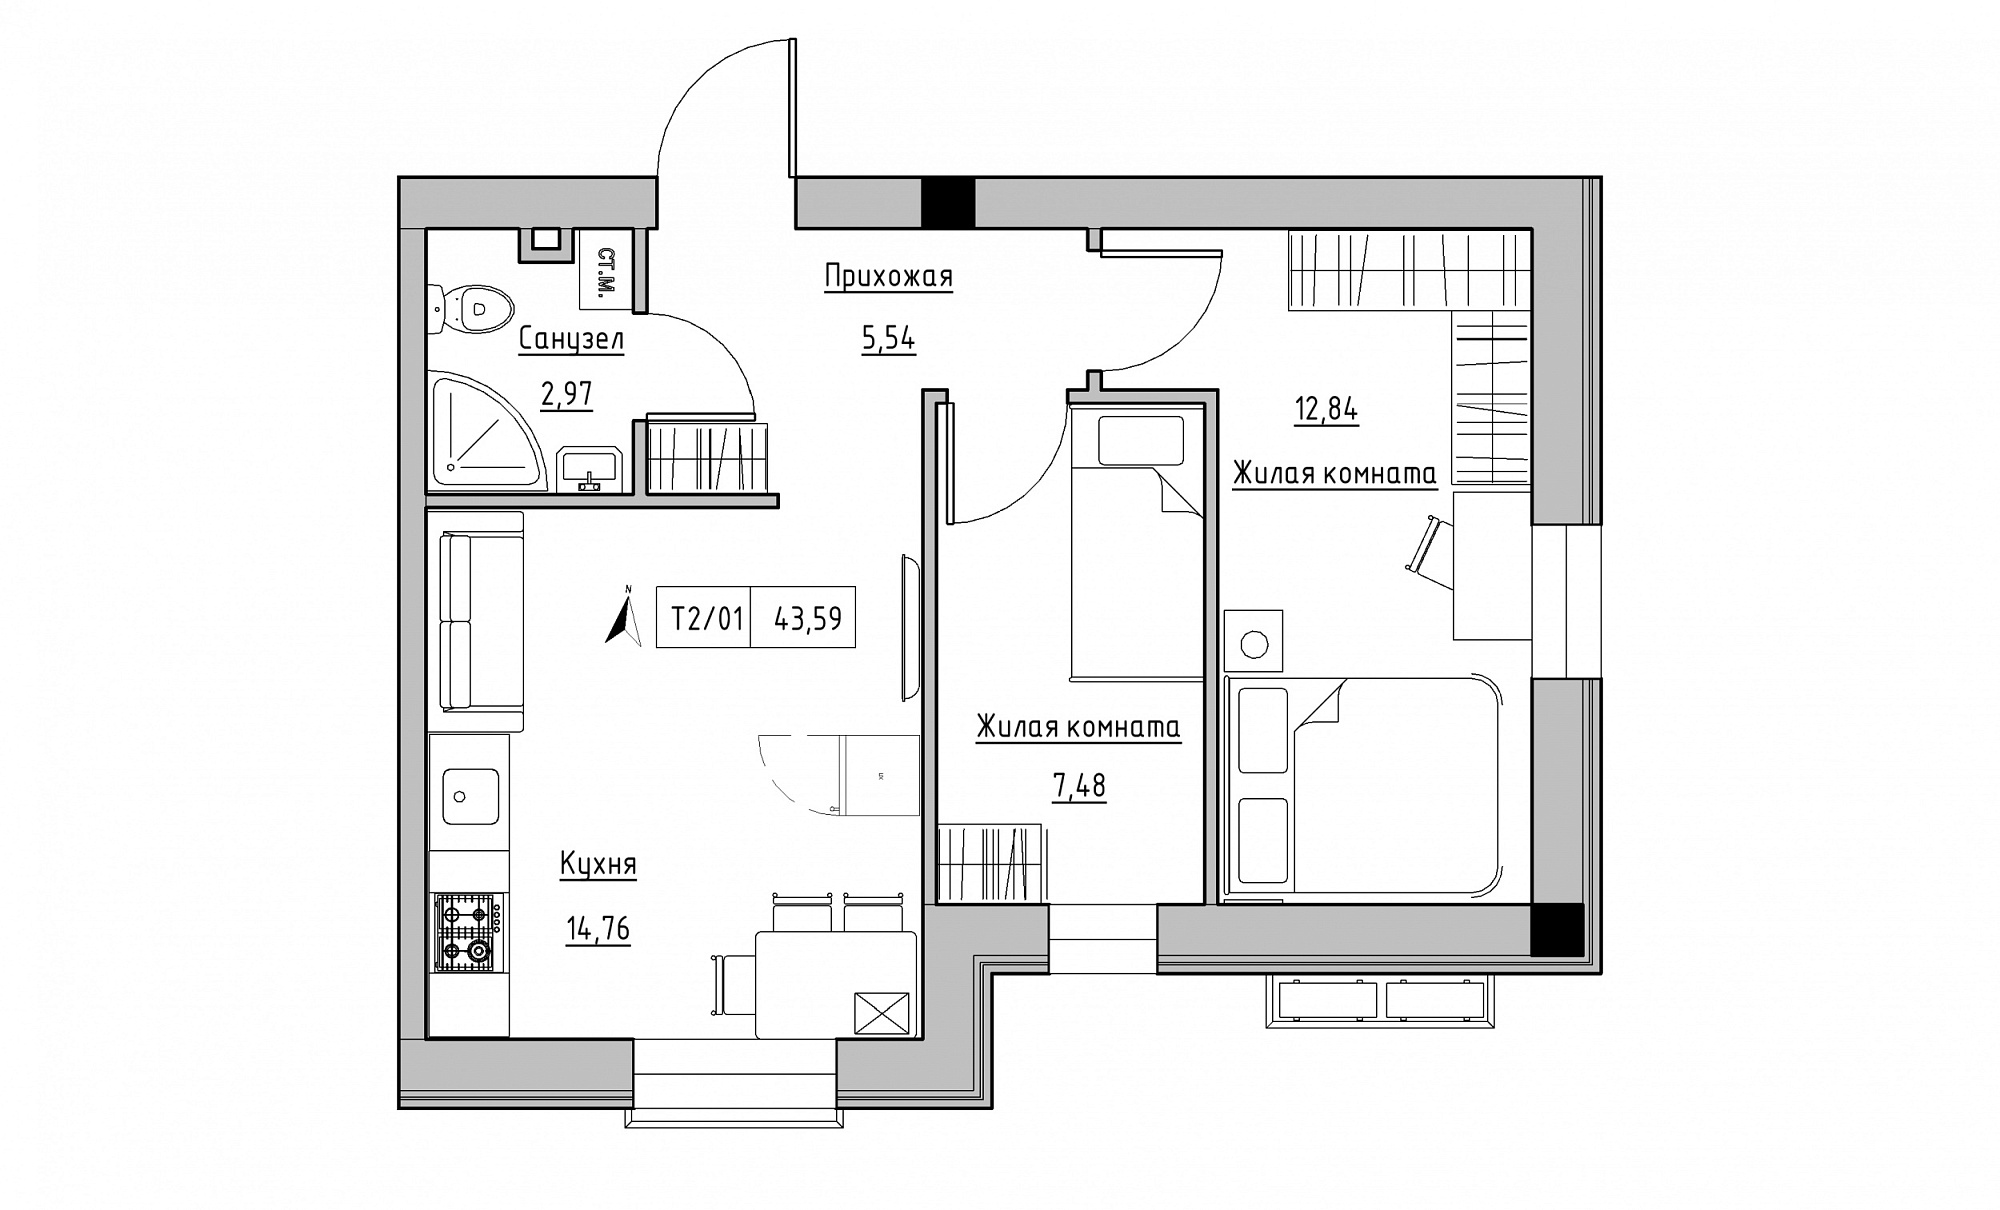 Planning 2-rm flats area 43.59m2, KS-015-01/0008.